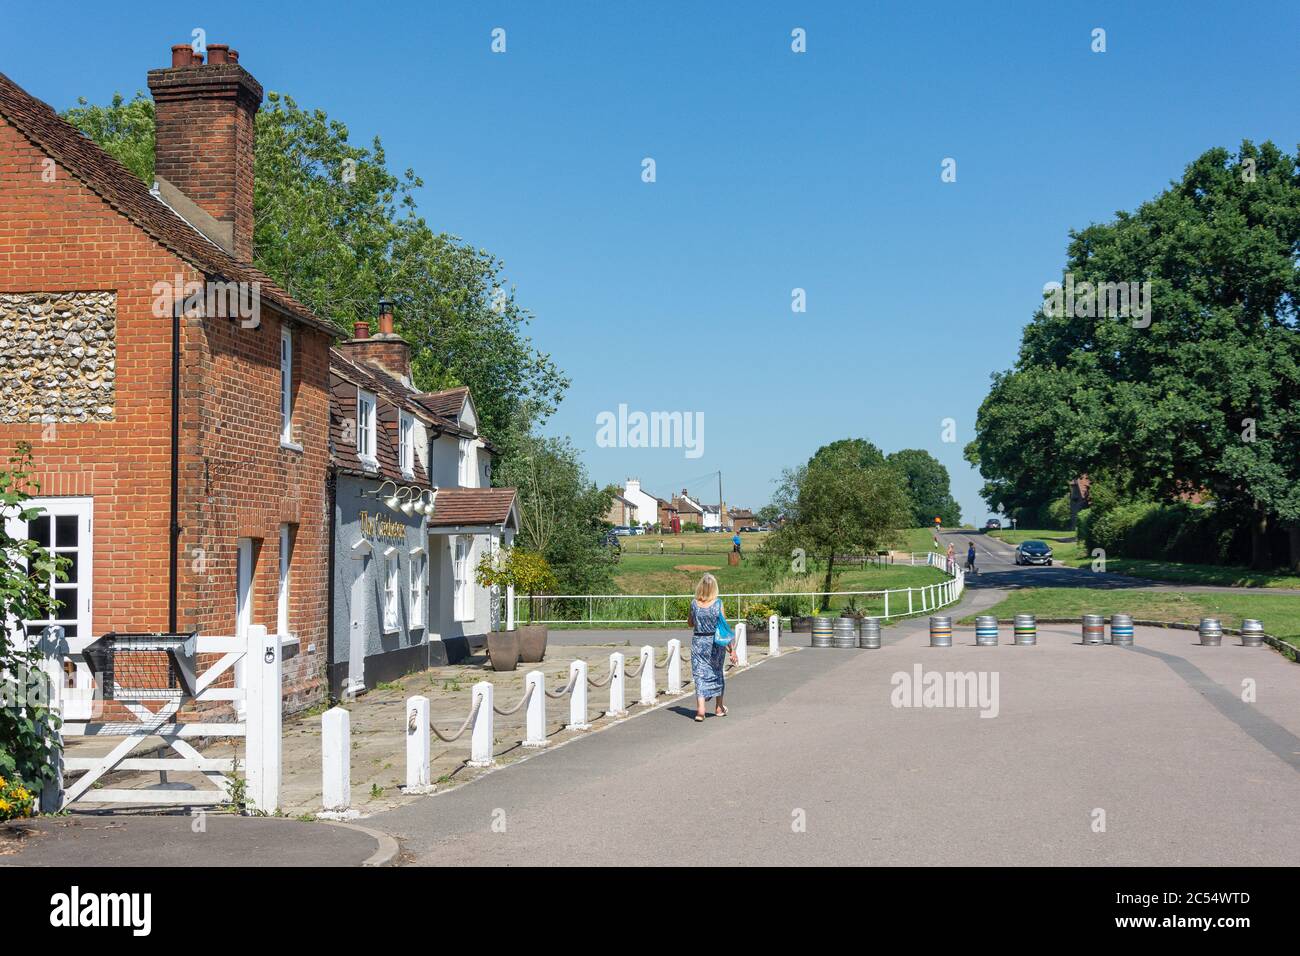 The Cricketers Pub and pond, The Green, Sarratt, Hertfordshire, England, United Kingdom Stock Photo